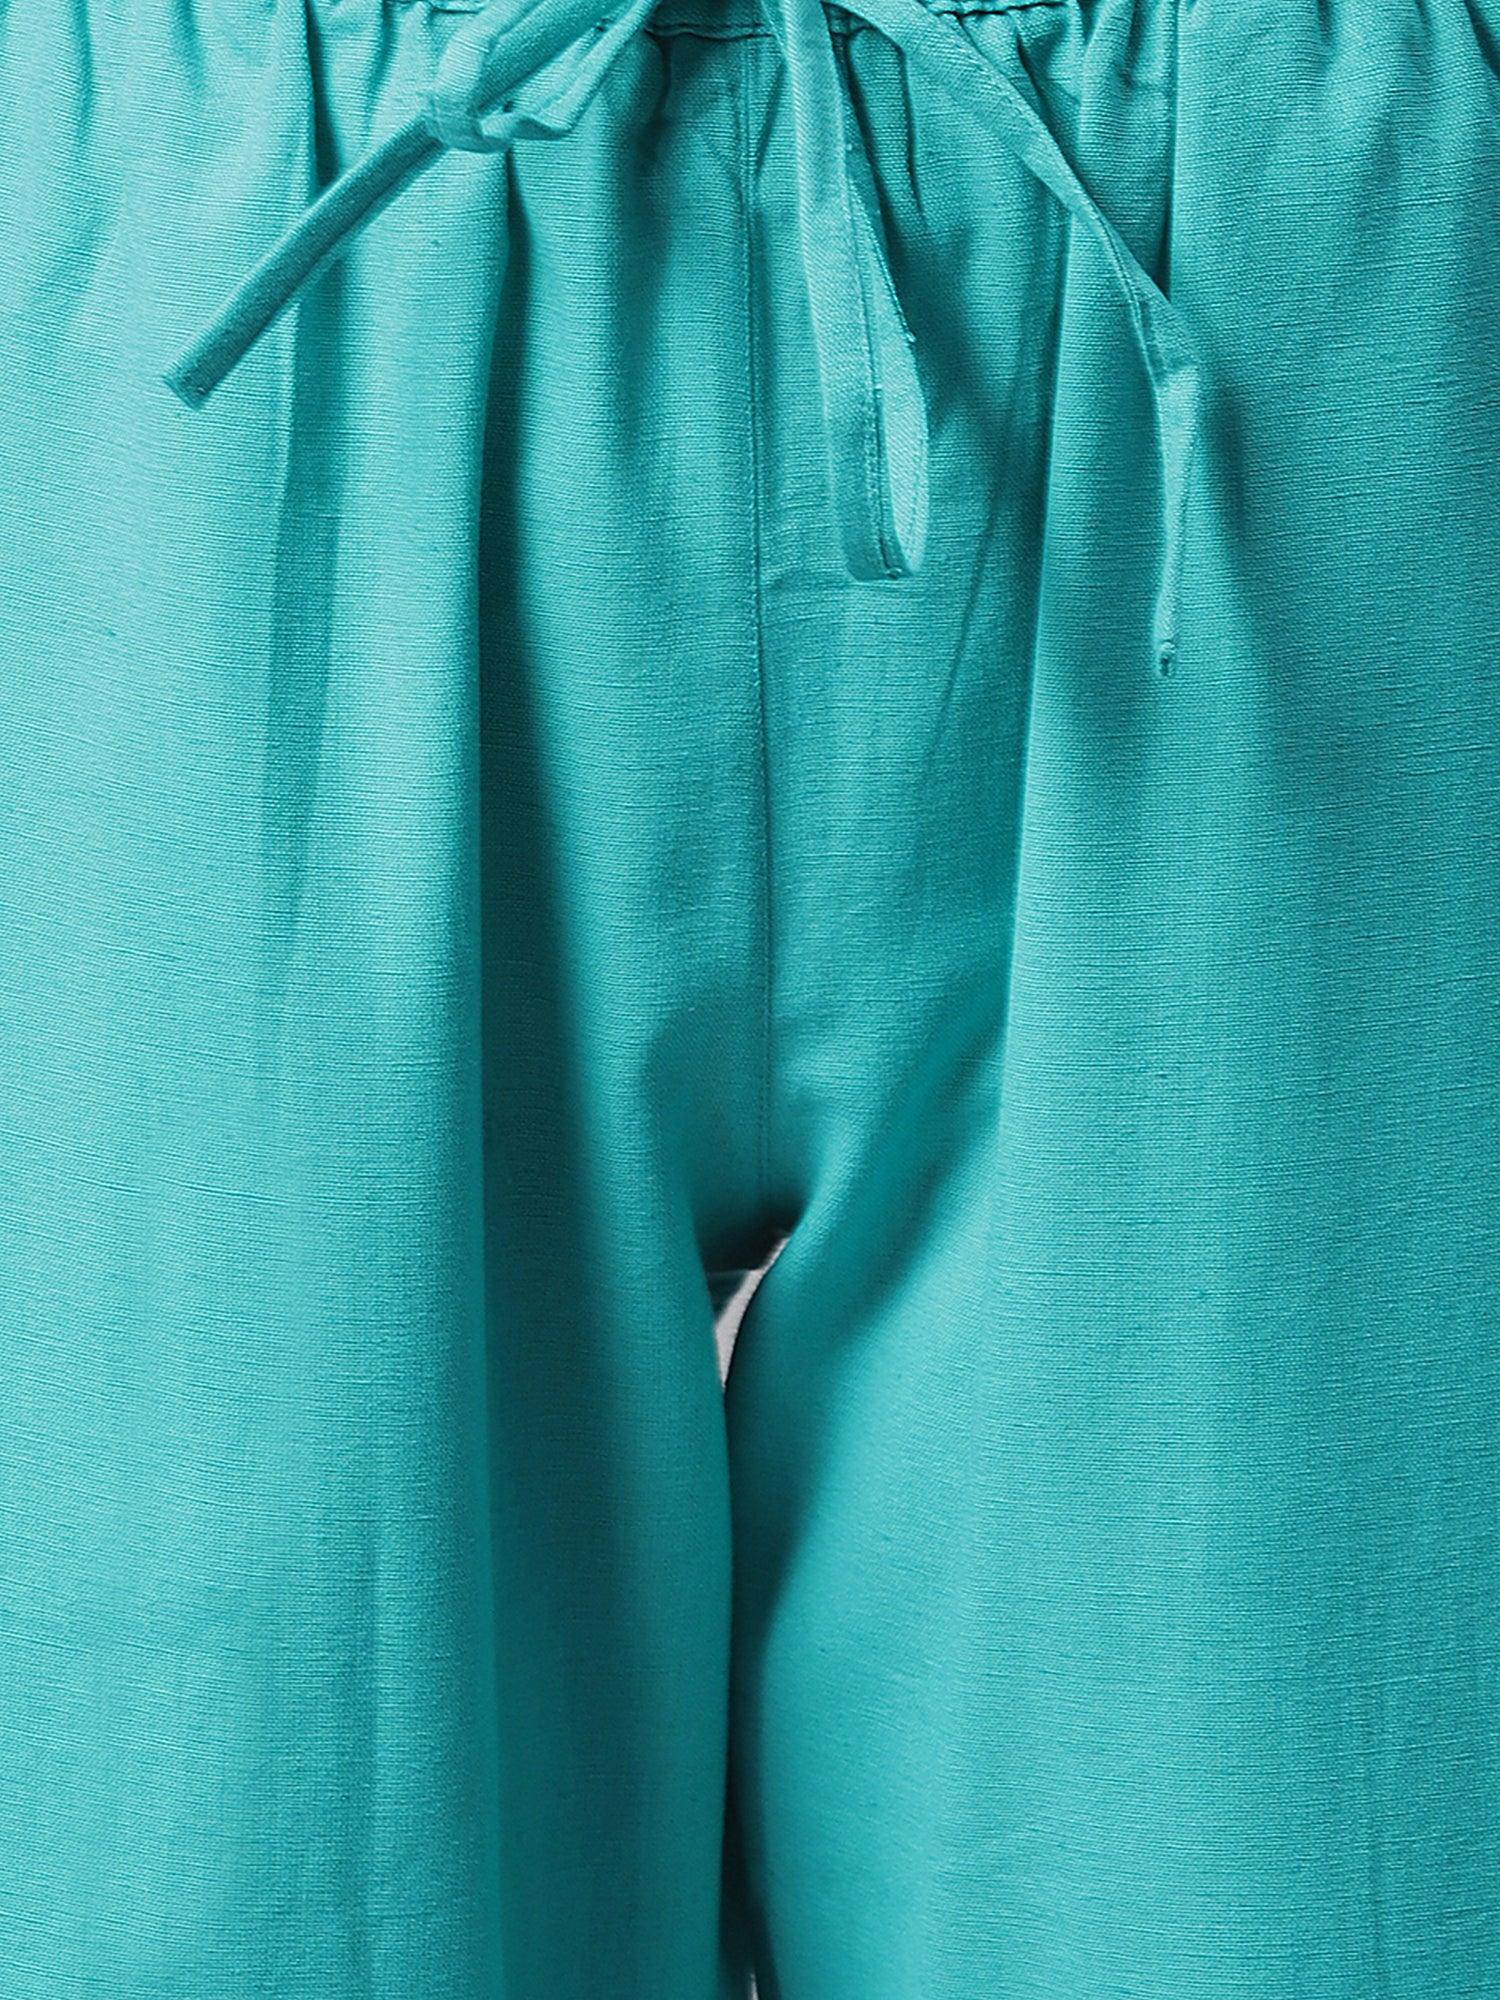 Turquoise Blue Cotton Flex Solid Night Suit Set Janasya-Discontinue